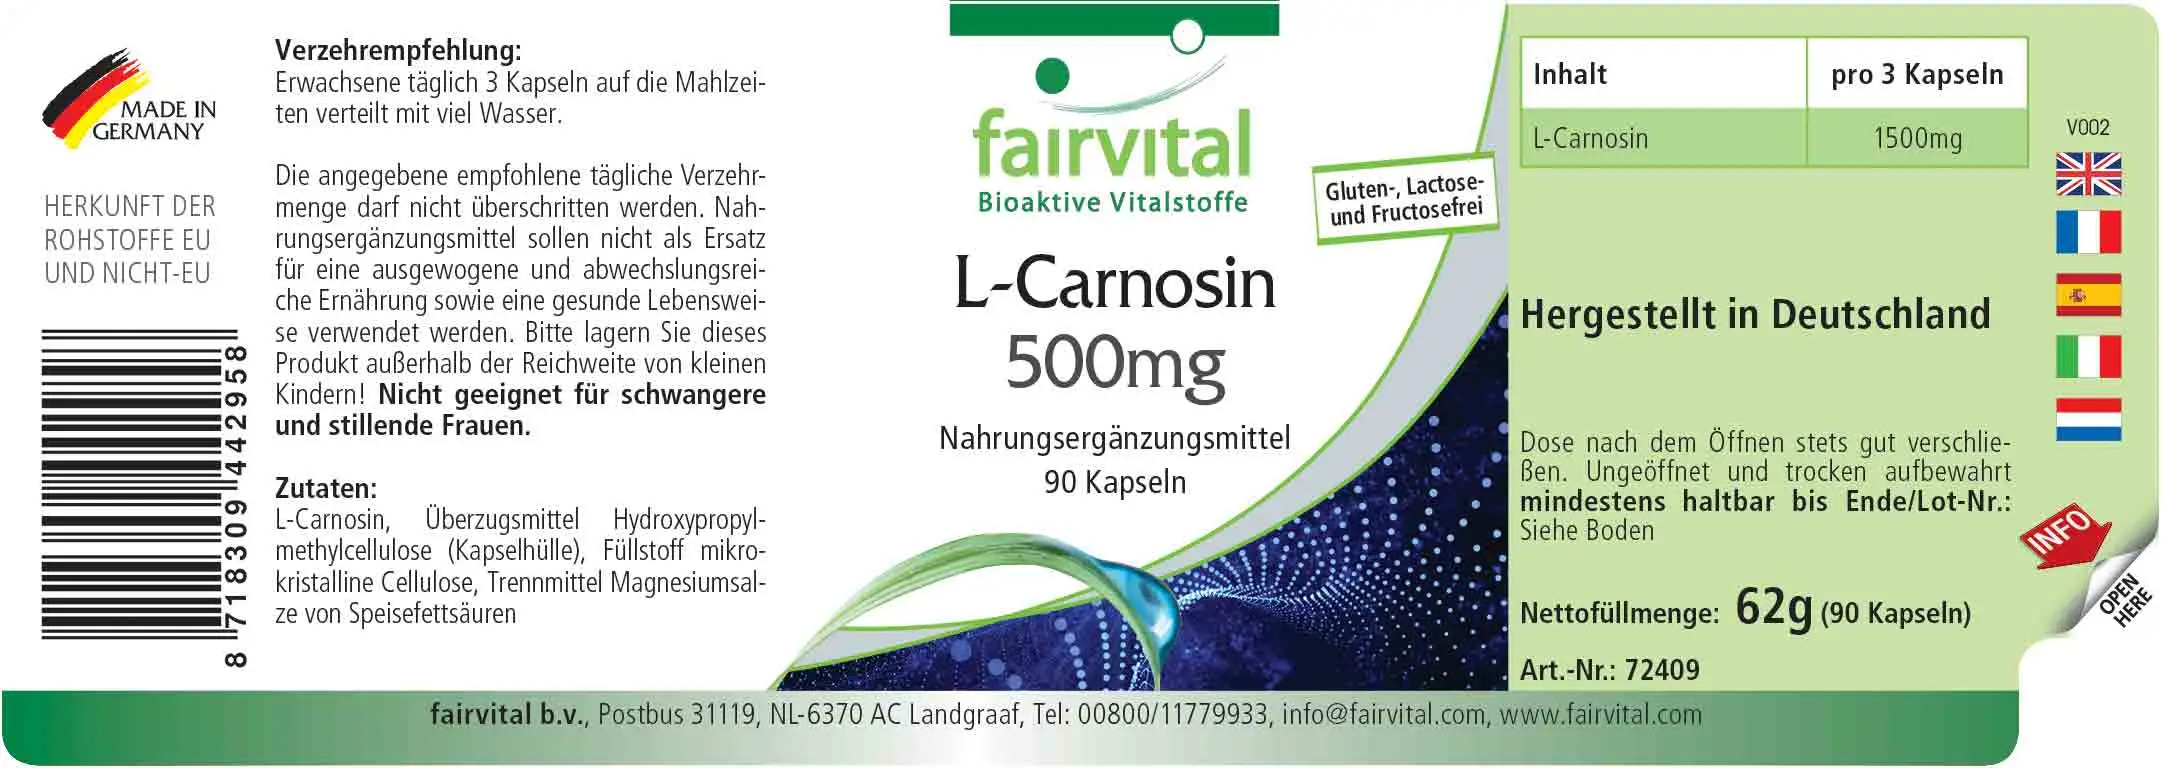 L-Carnosine 500mg - 90 gélules